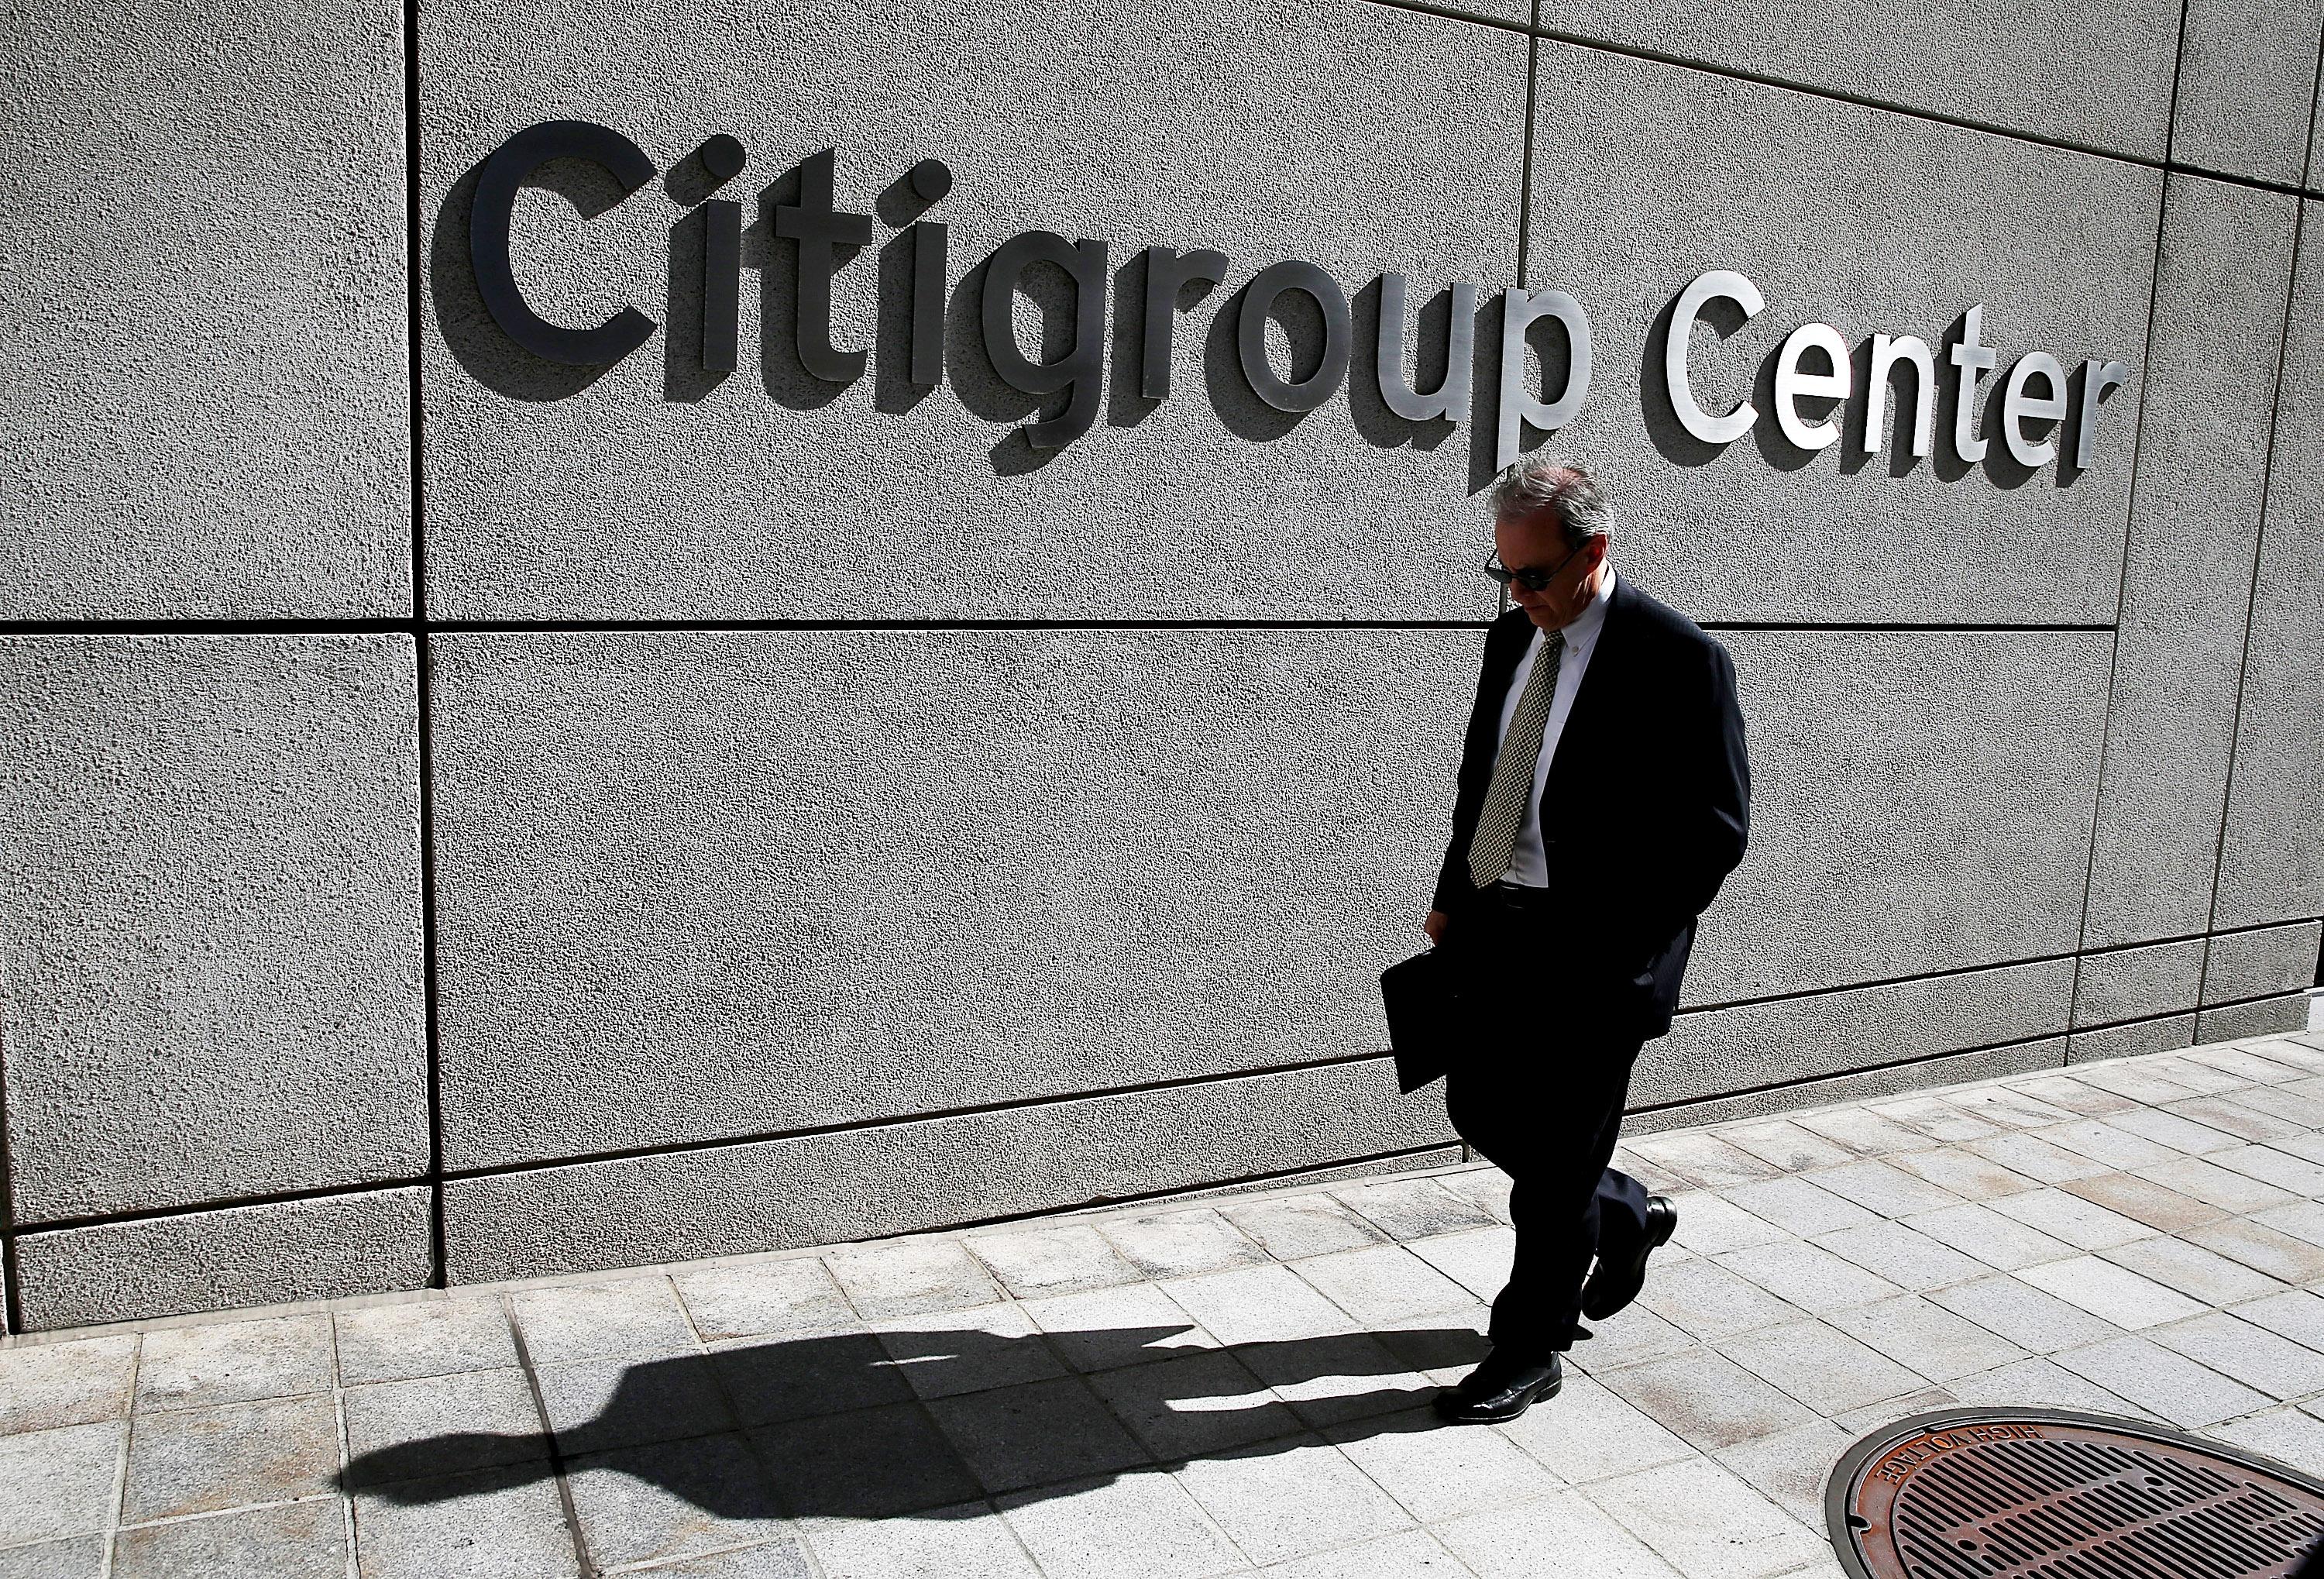 Citigroup. Citigroup Center. City Group. Обман инвесторов.